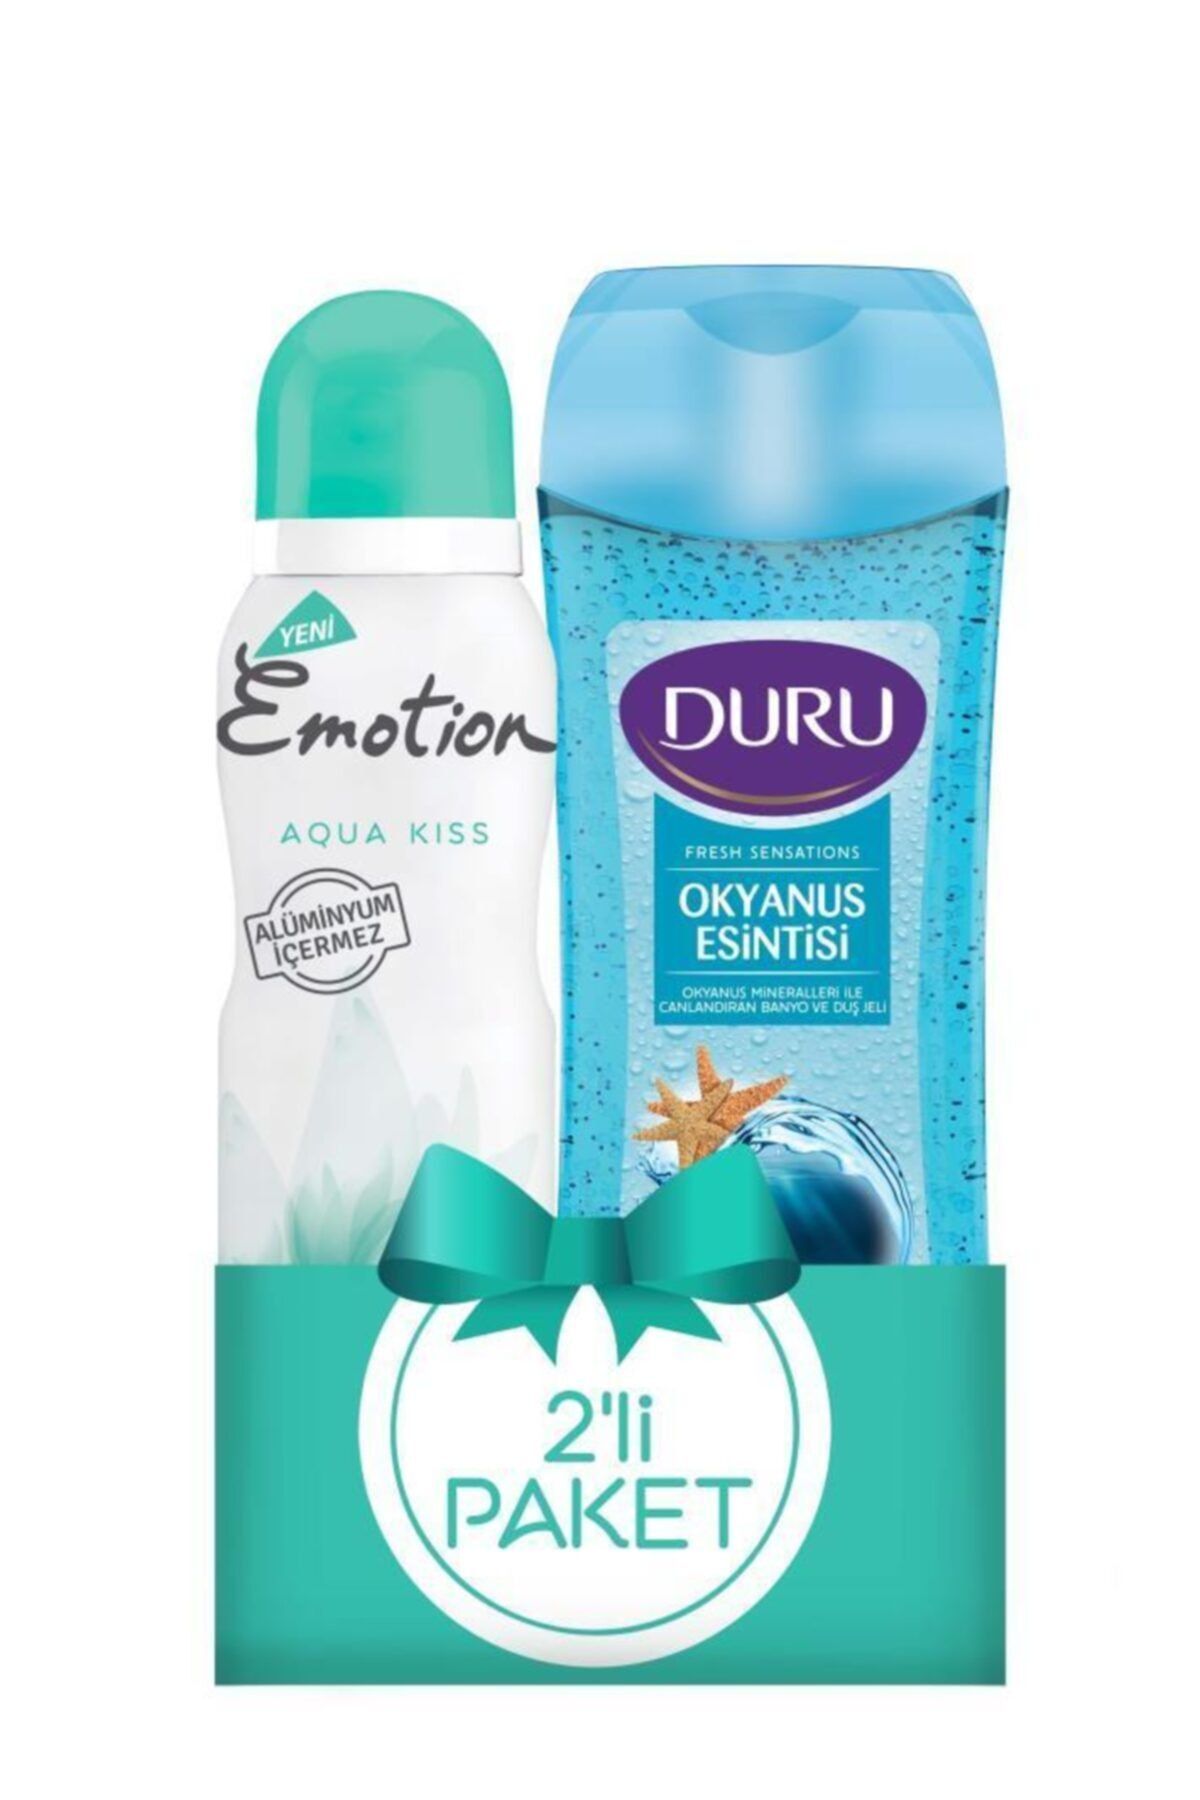 Emotion Deodorant Aqua Kiss 150ml +duru Duş Jeli Okyanus Esintisi 250ml